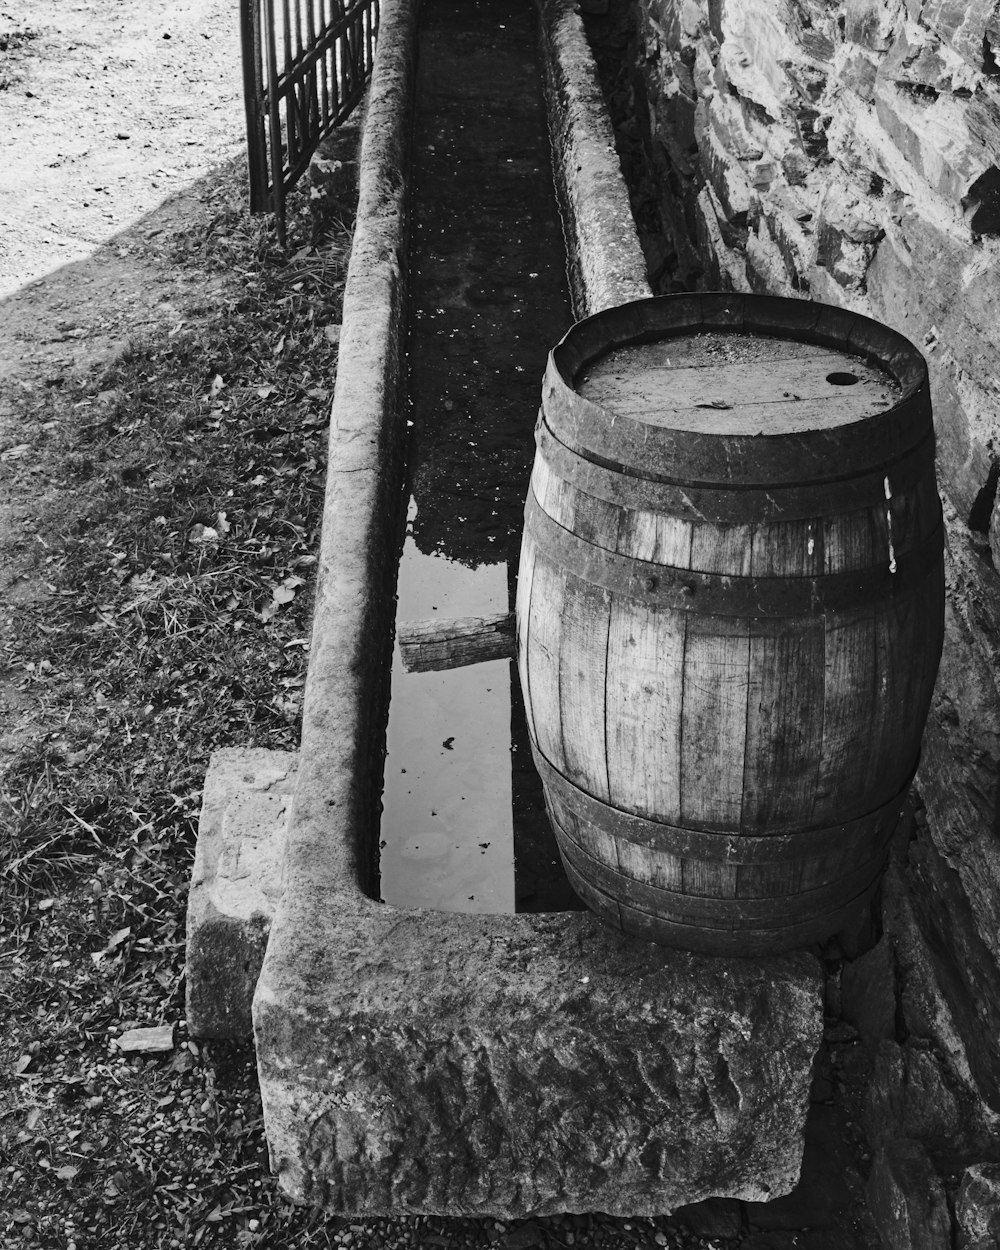 a barrel on a stone wall